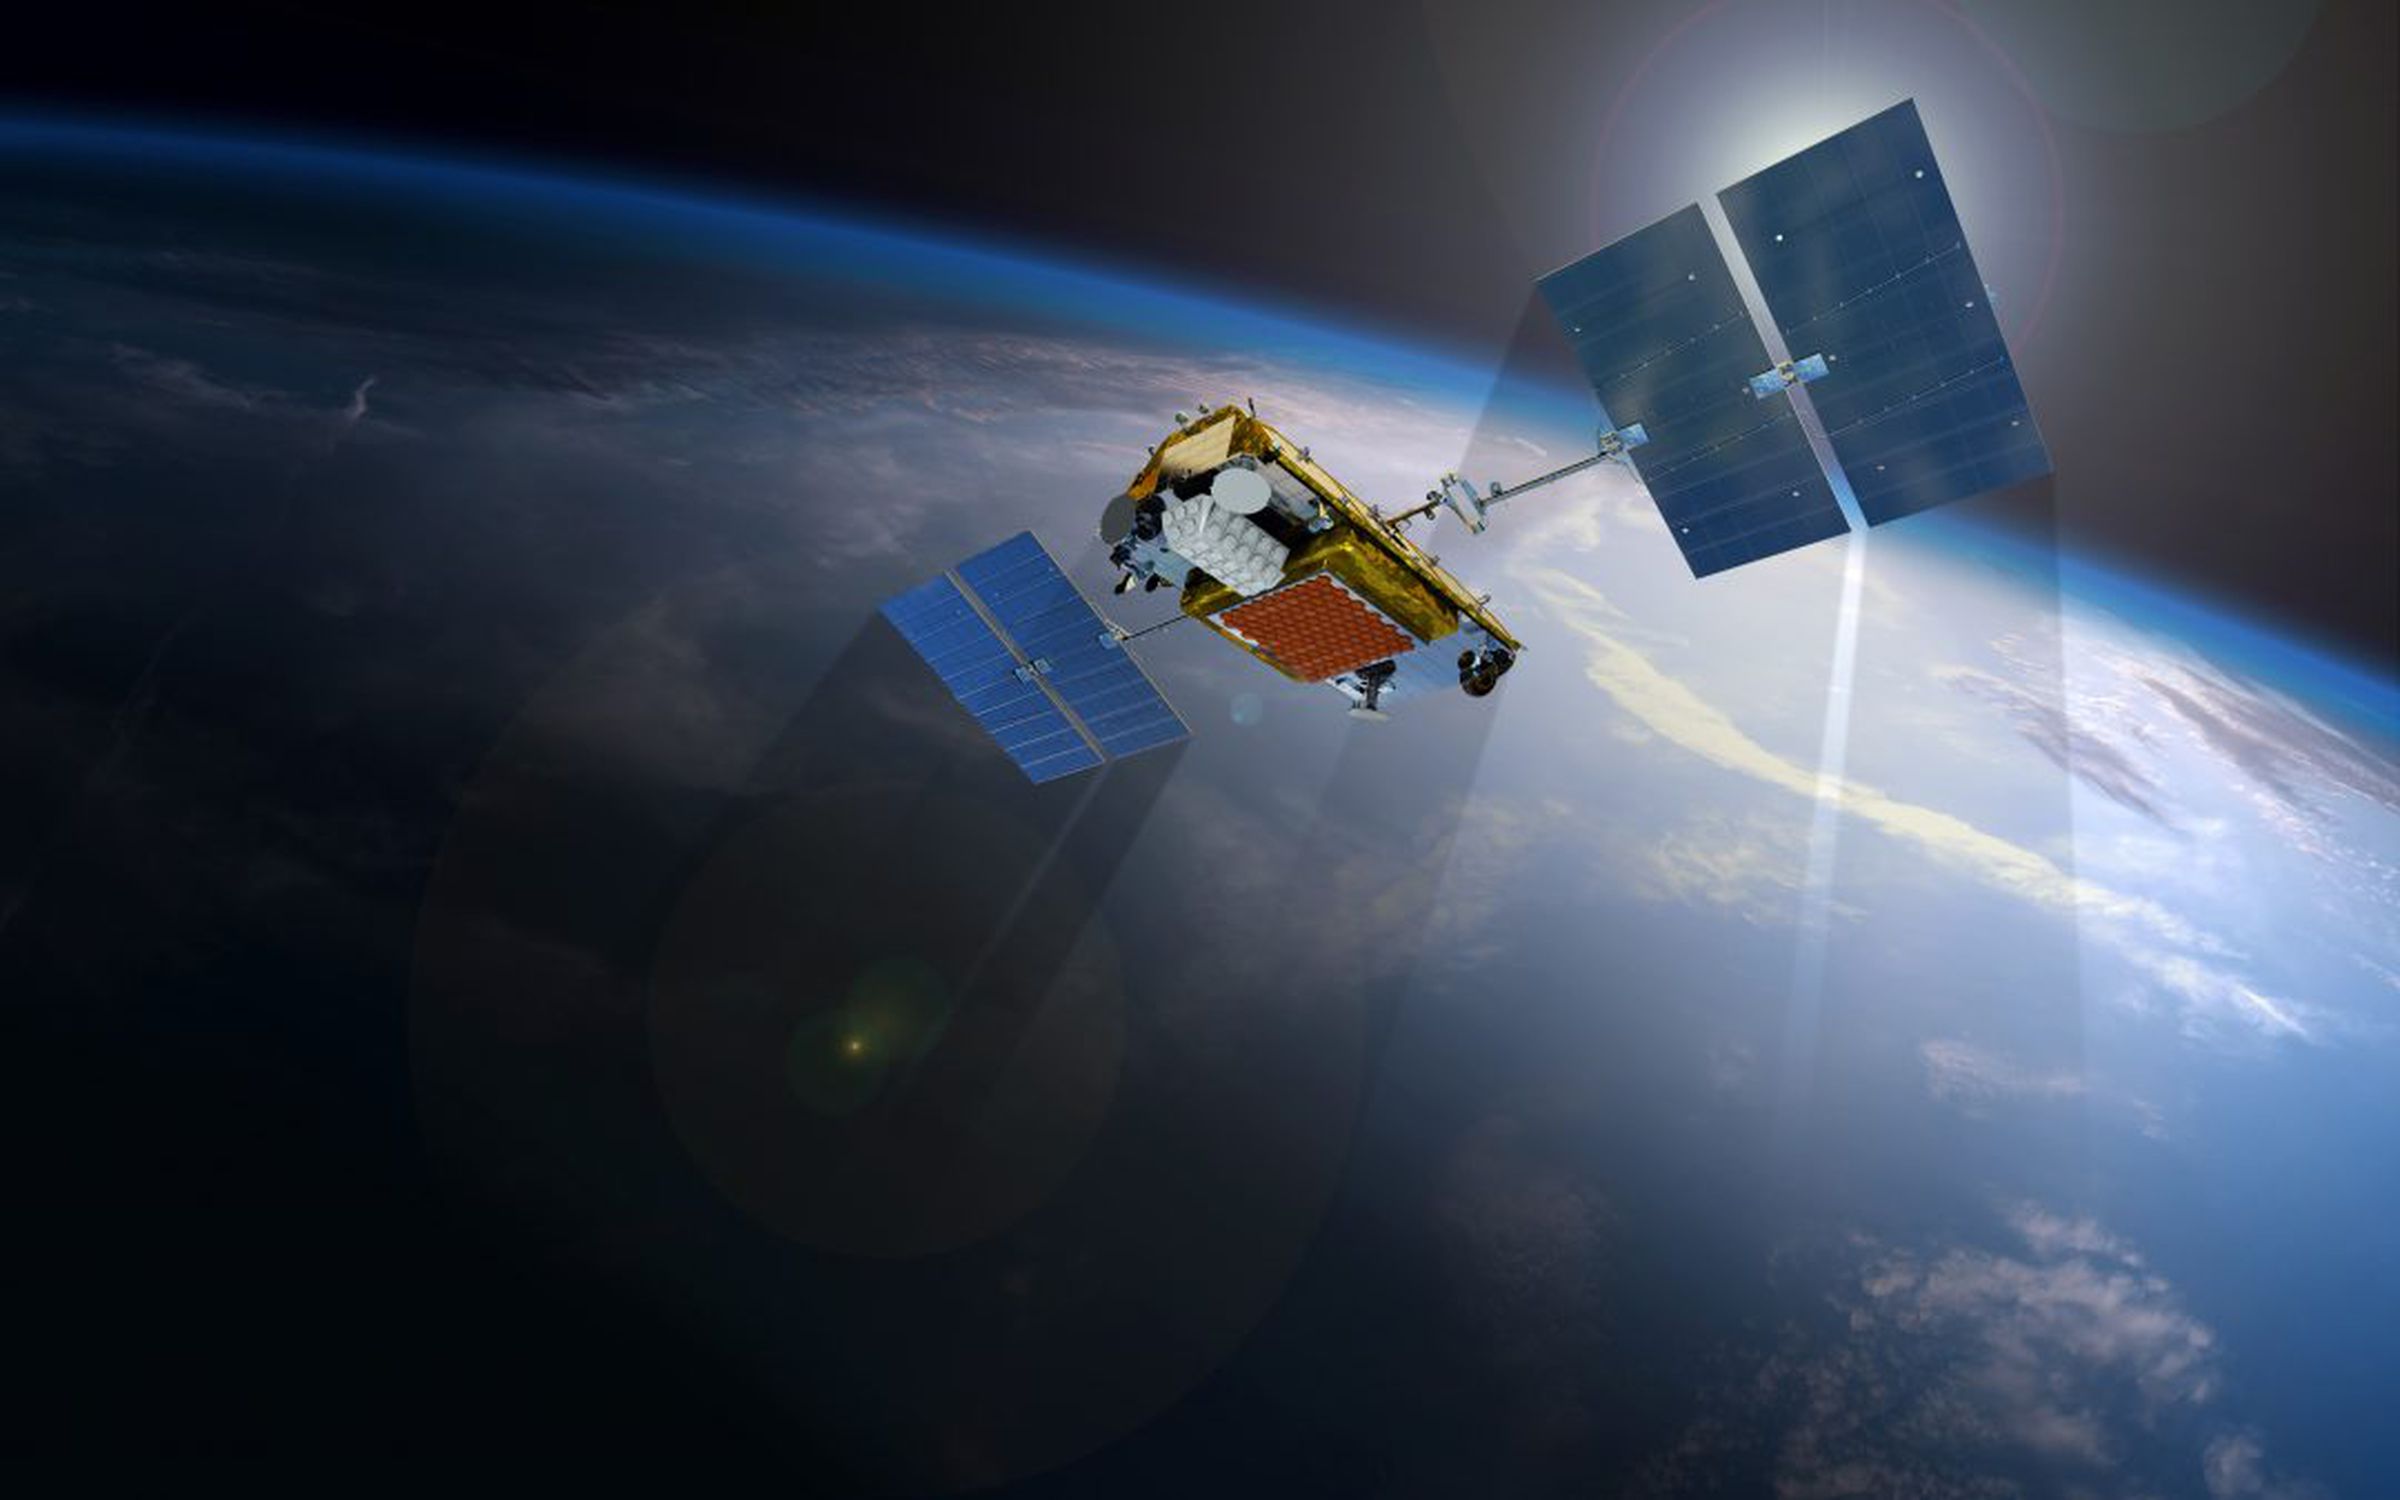 An artistic rendering of what an Iridium NEXT satellite